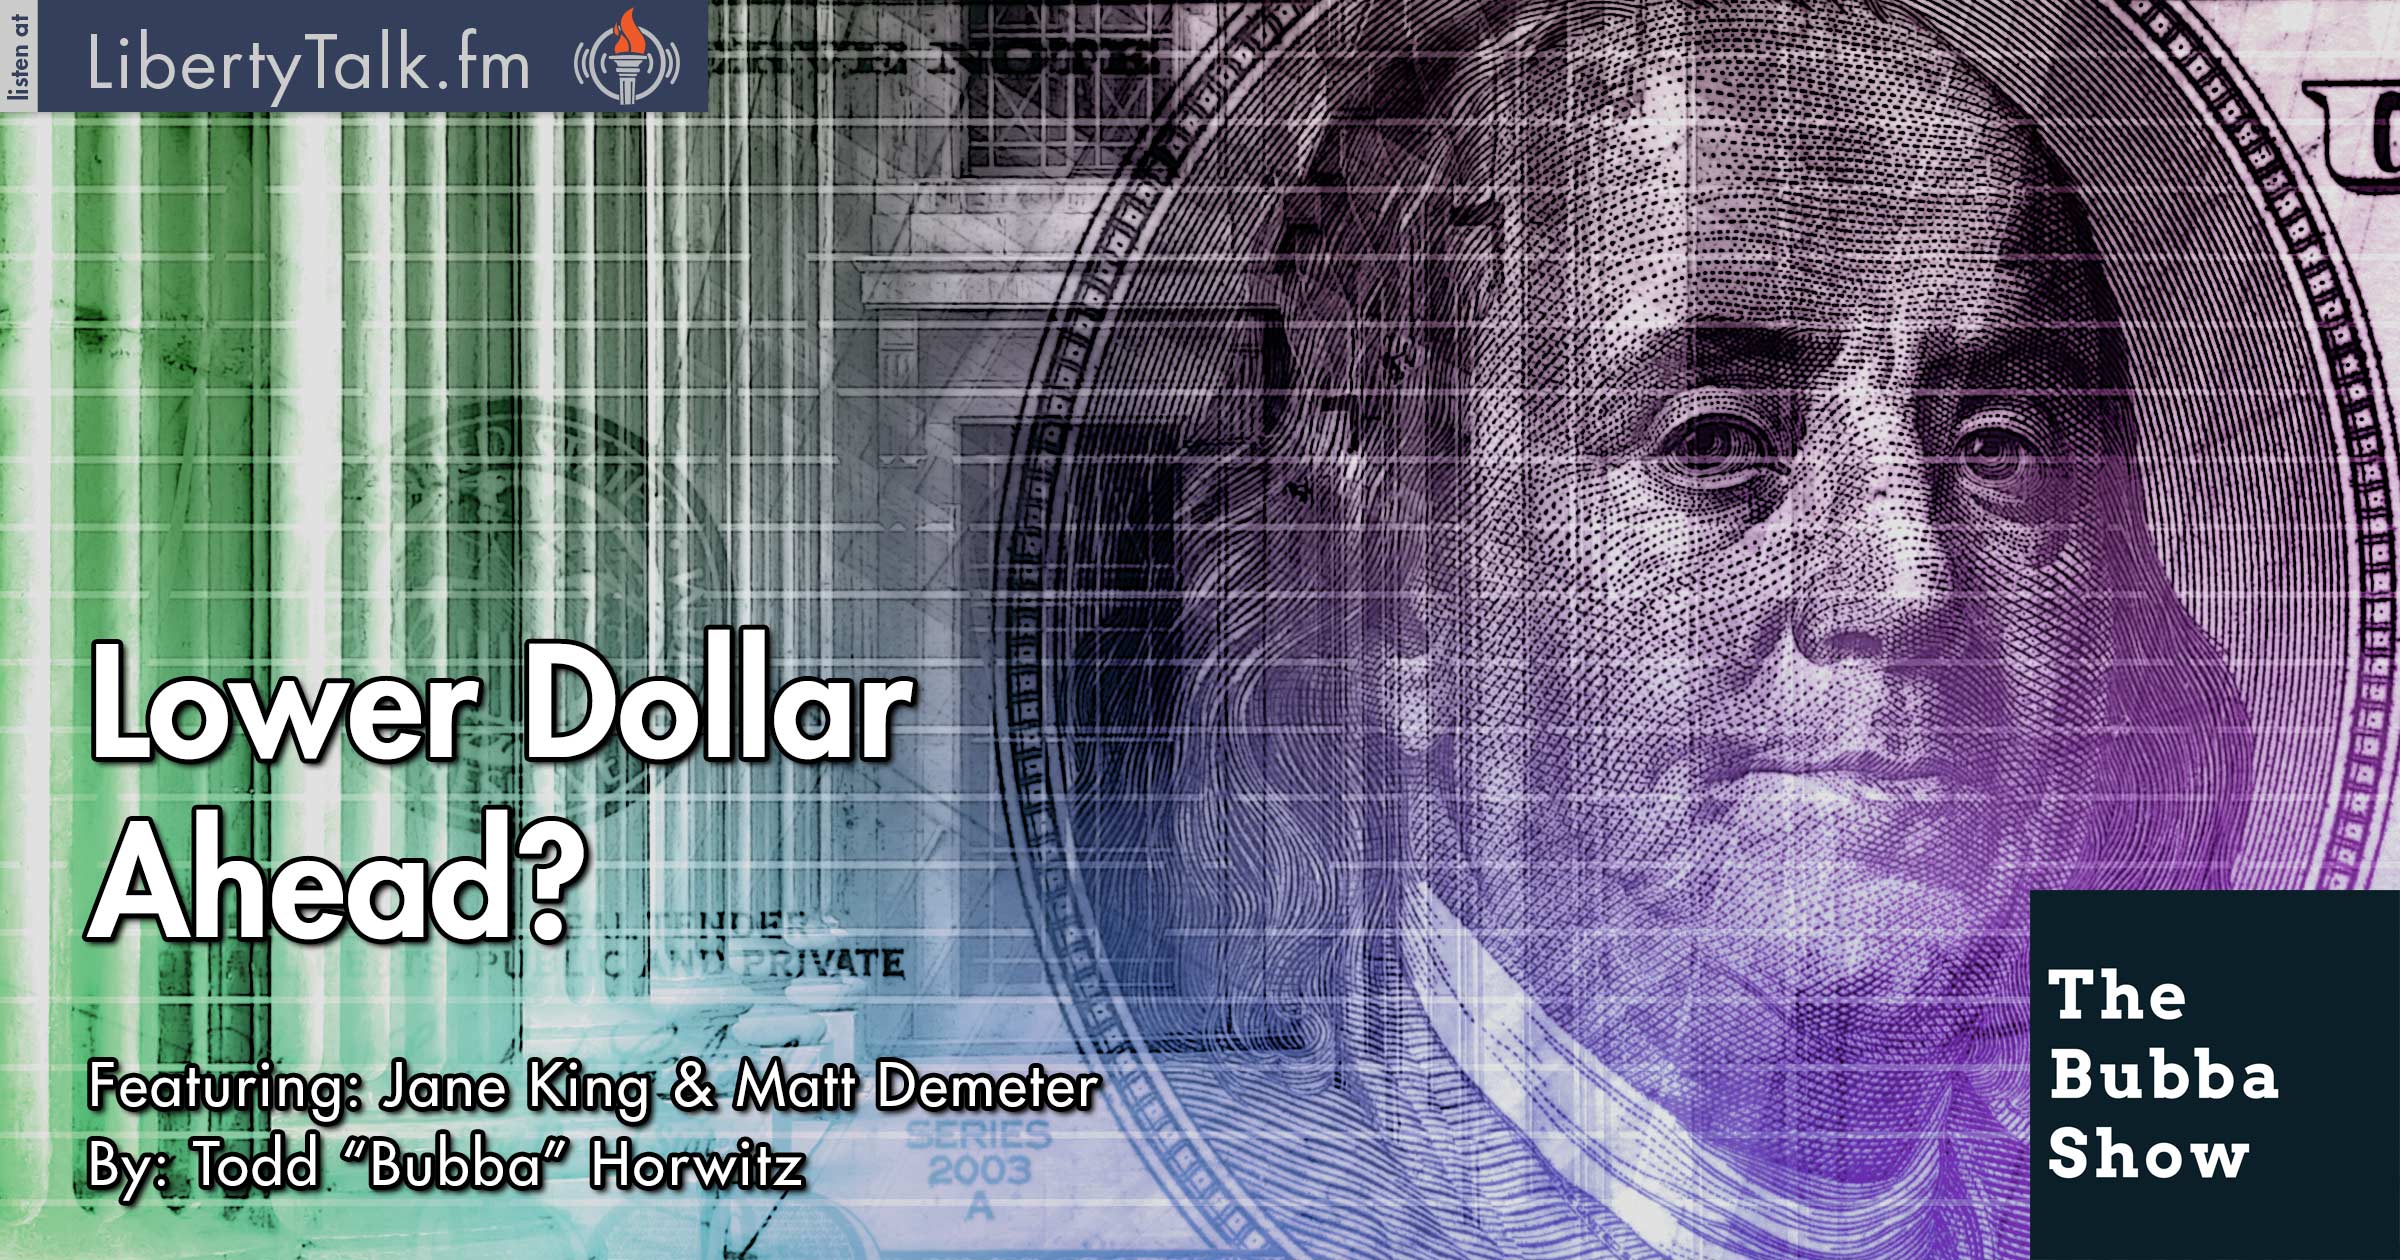 Lower Dollar Ahead? - The Bubba Show